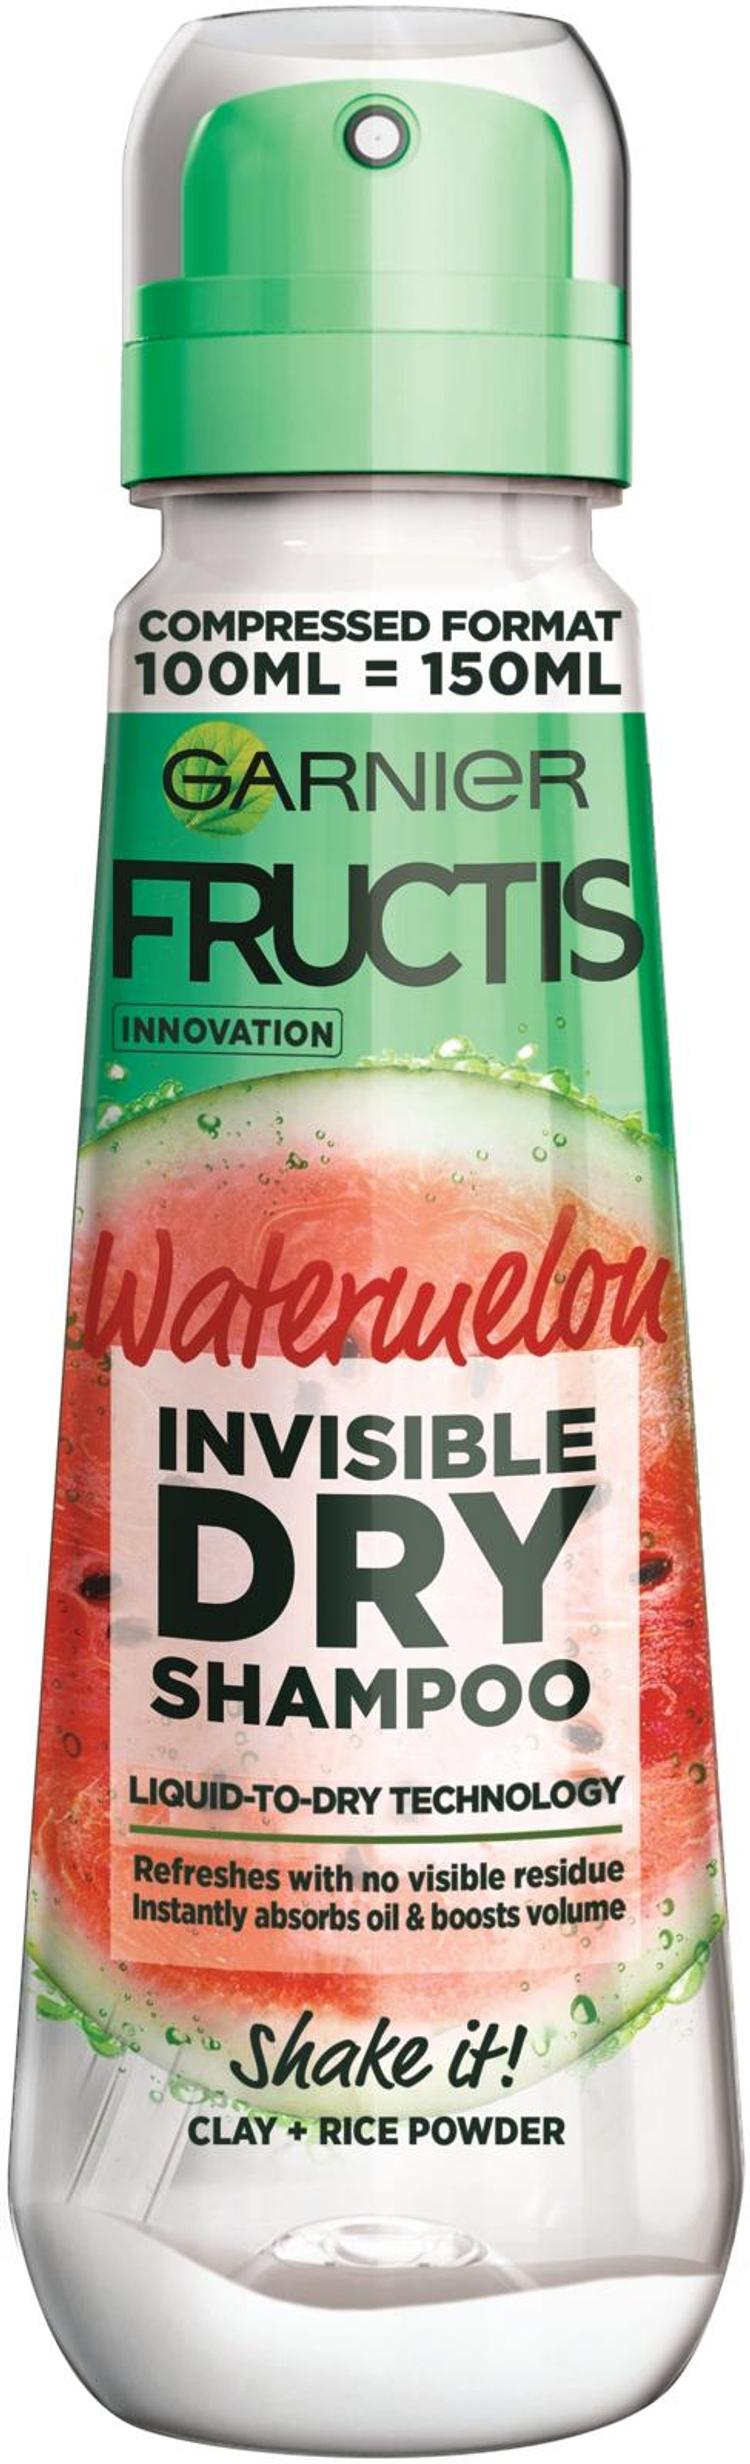 Garnier Fructis Invisible Dry shampoo Watermelon kuivashampoo 100ml